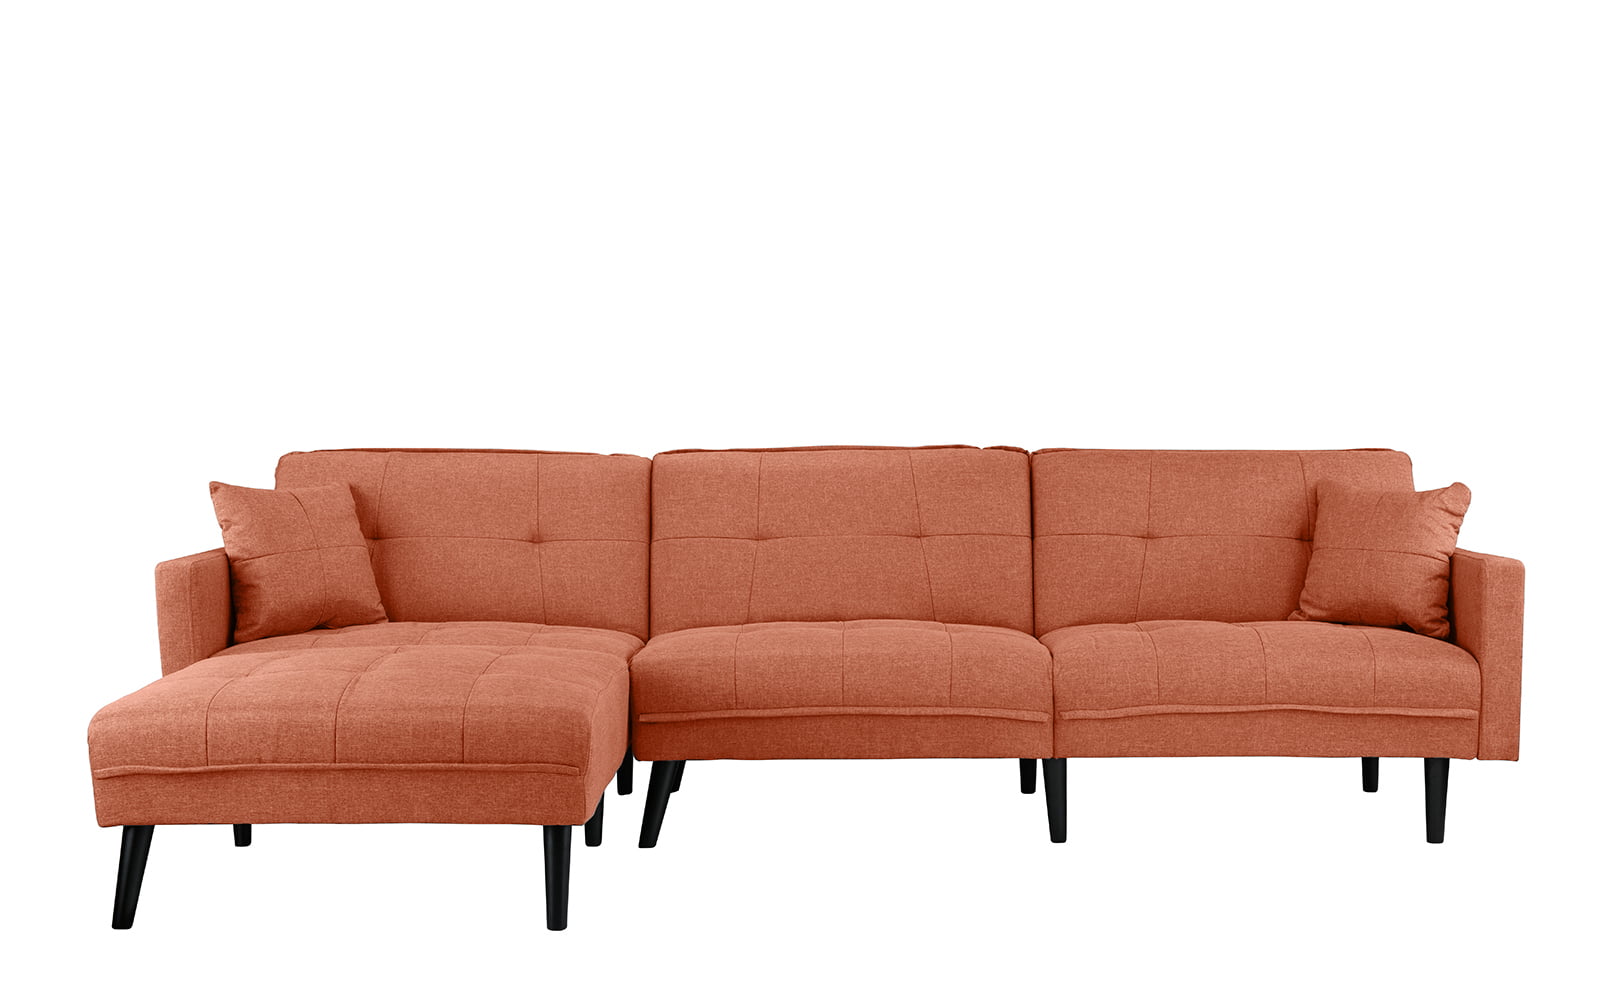 tufted leather sleeper futon sofa